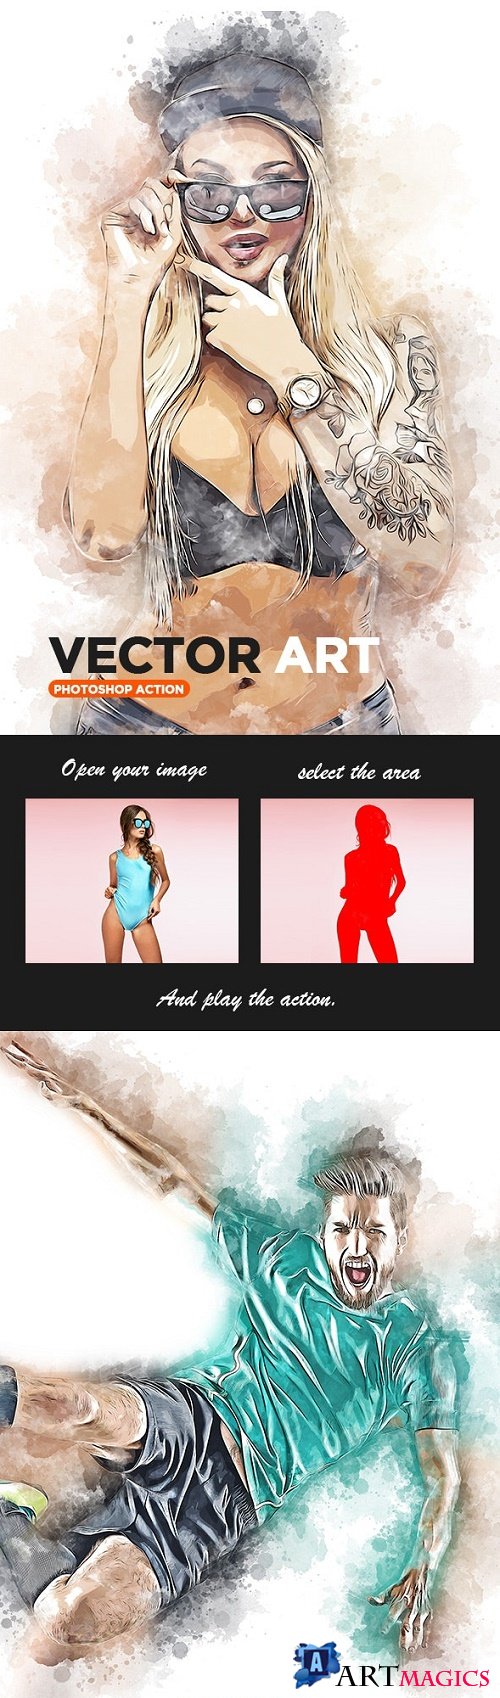 Vector Art Photoshop Action 23835630